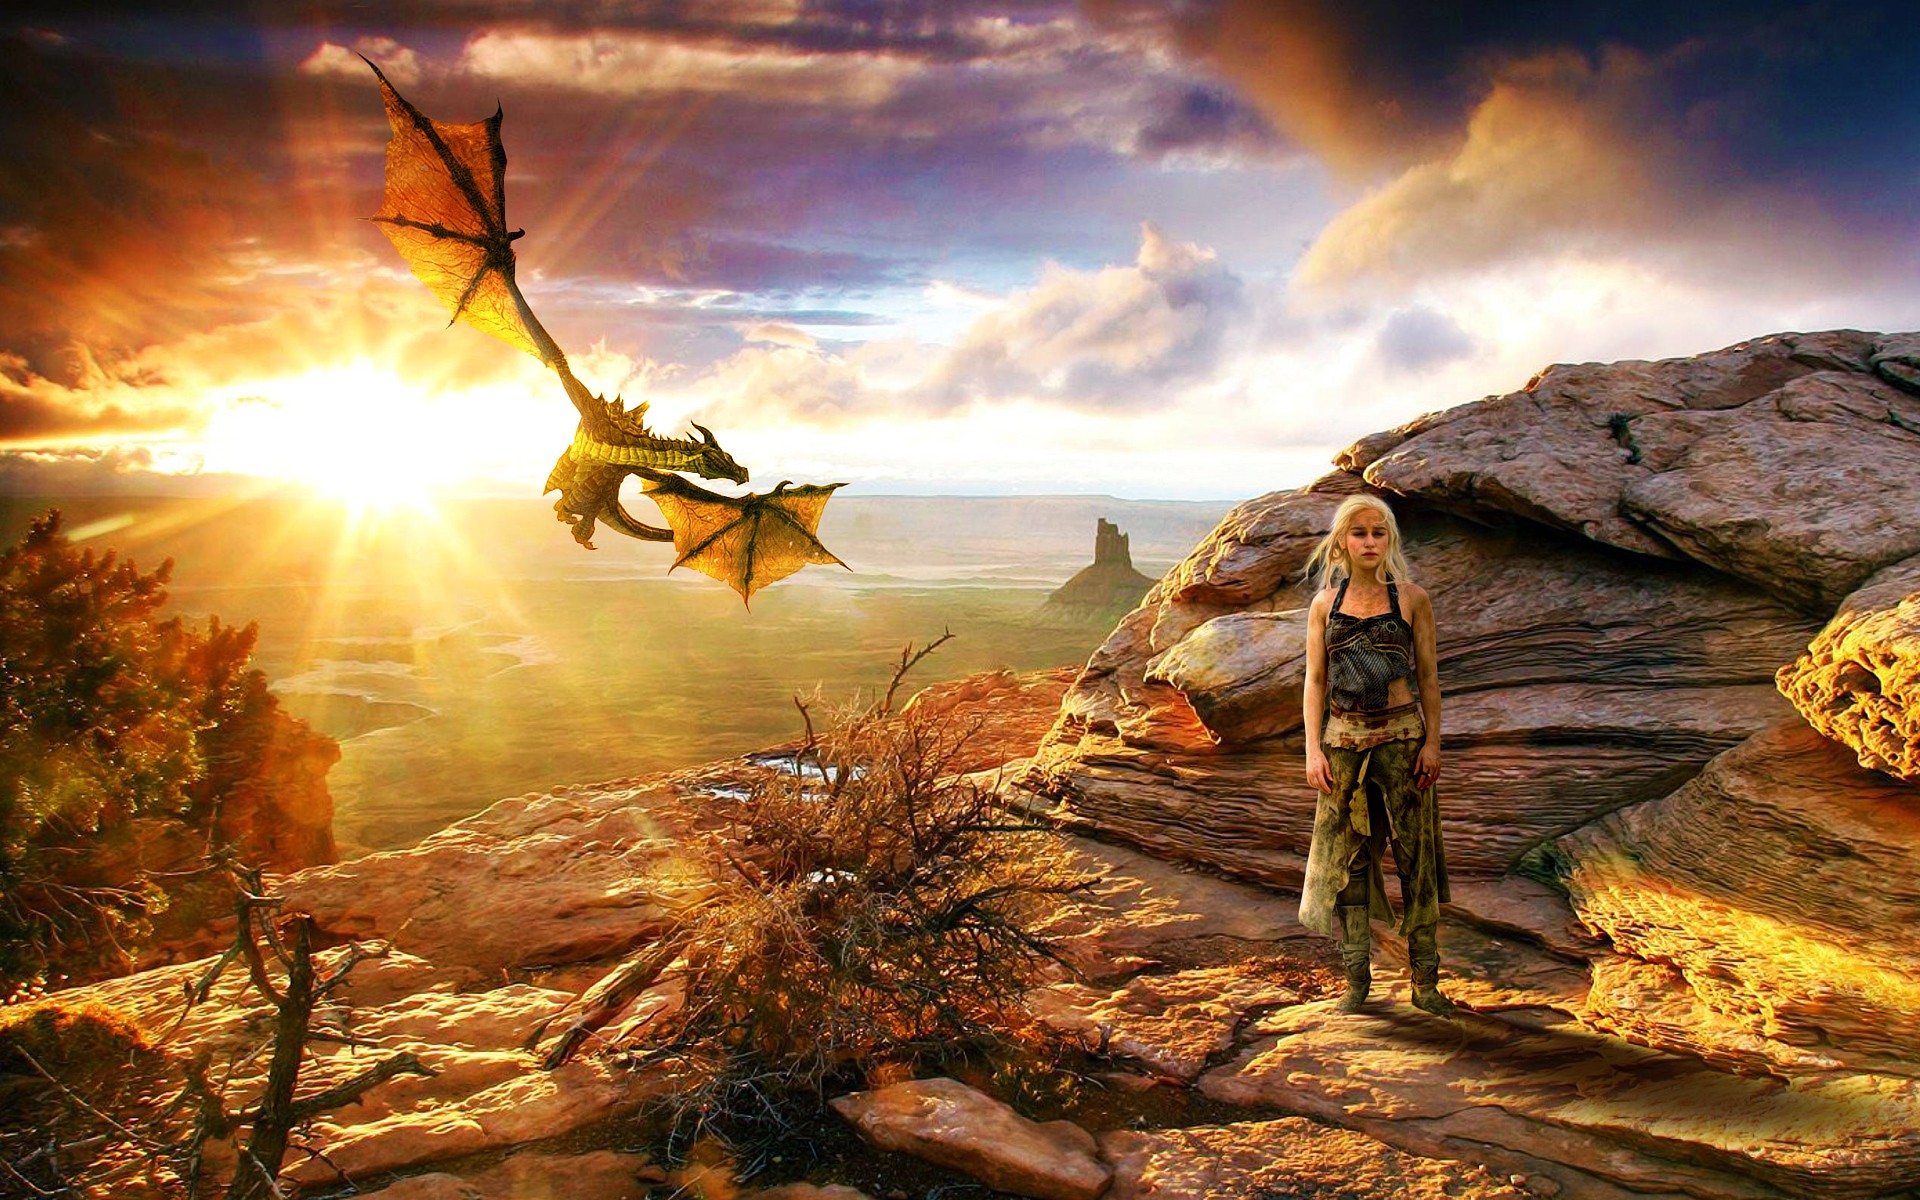 emilia clarke, game of thrones, daenerys targaryen, tv show, dragon UHD